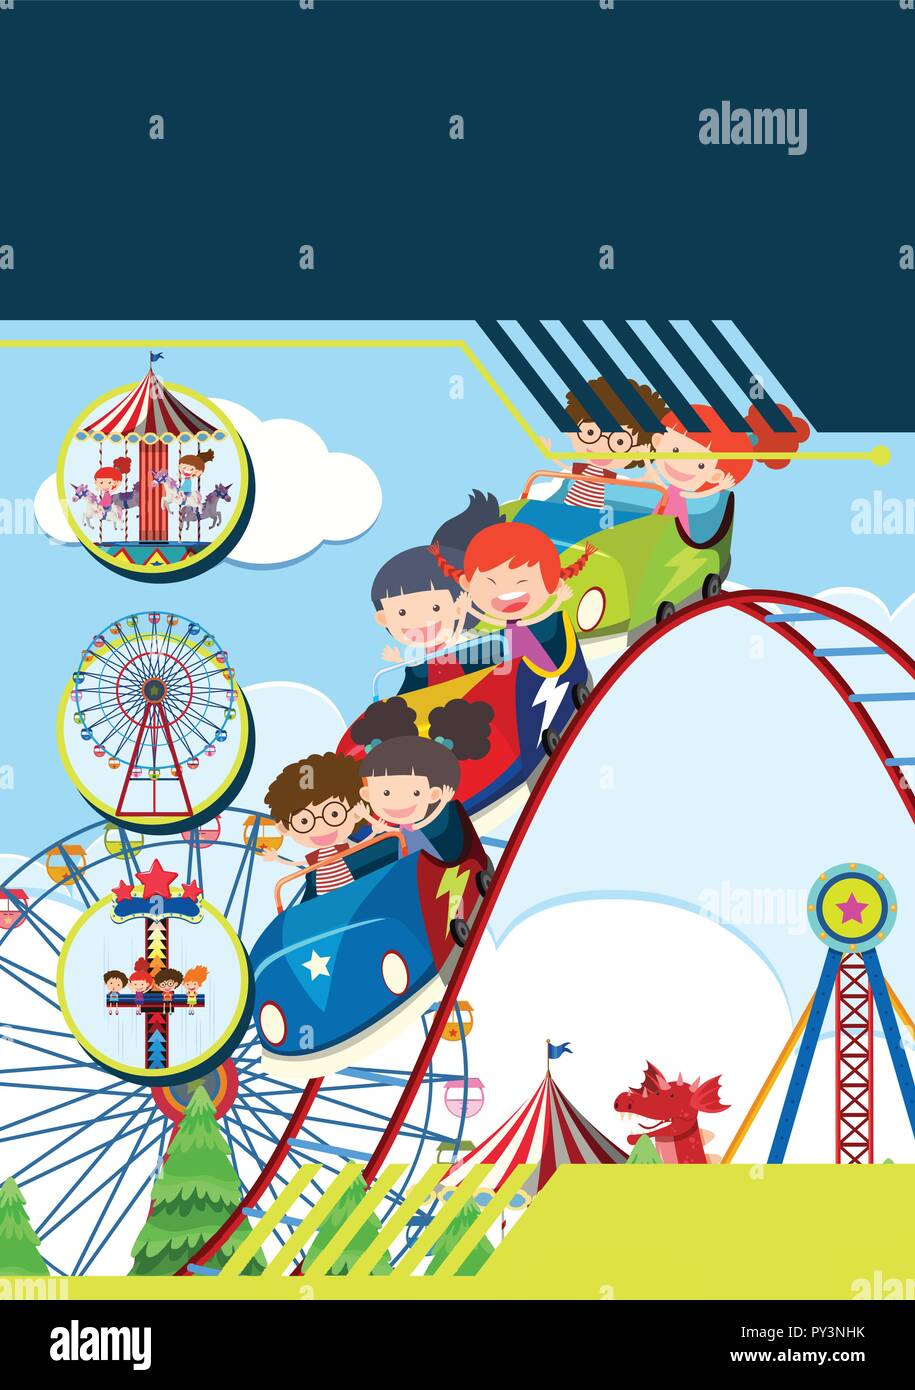 children-at-theme-park-template-illustration-stock-vector-image-art